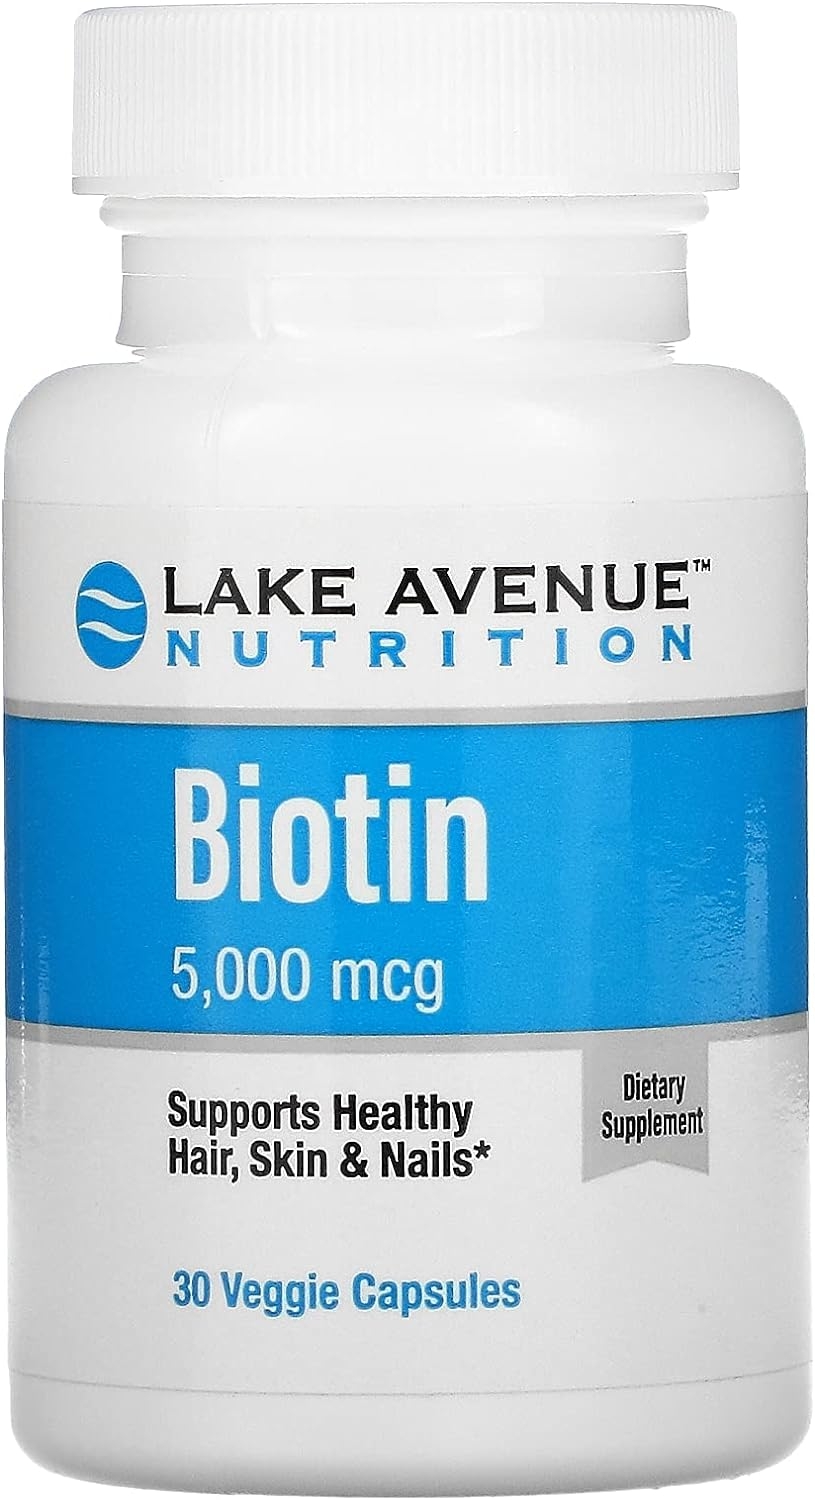 Lake Avenue Nutrition Biotin, 5,000 mcg, 30 Veggie Capsules